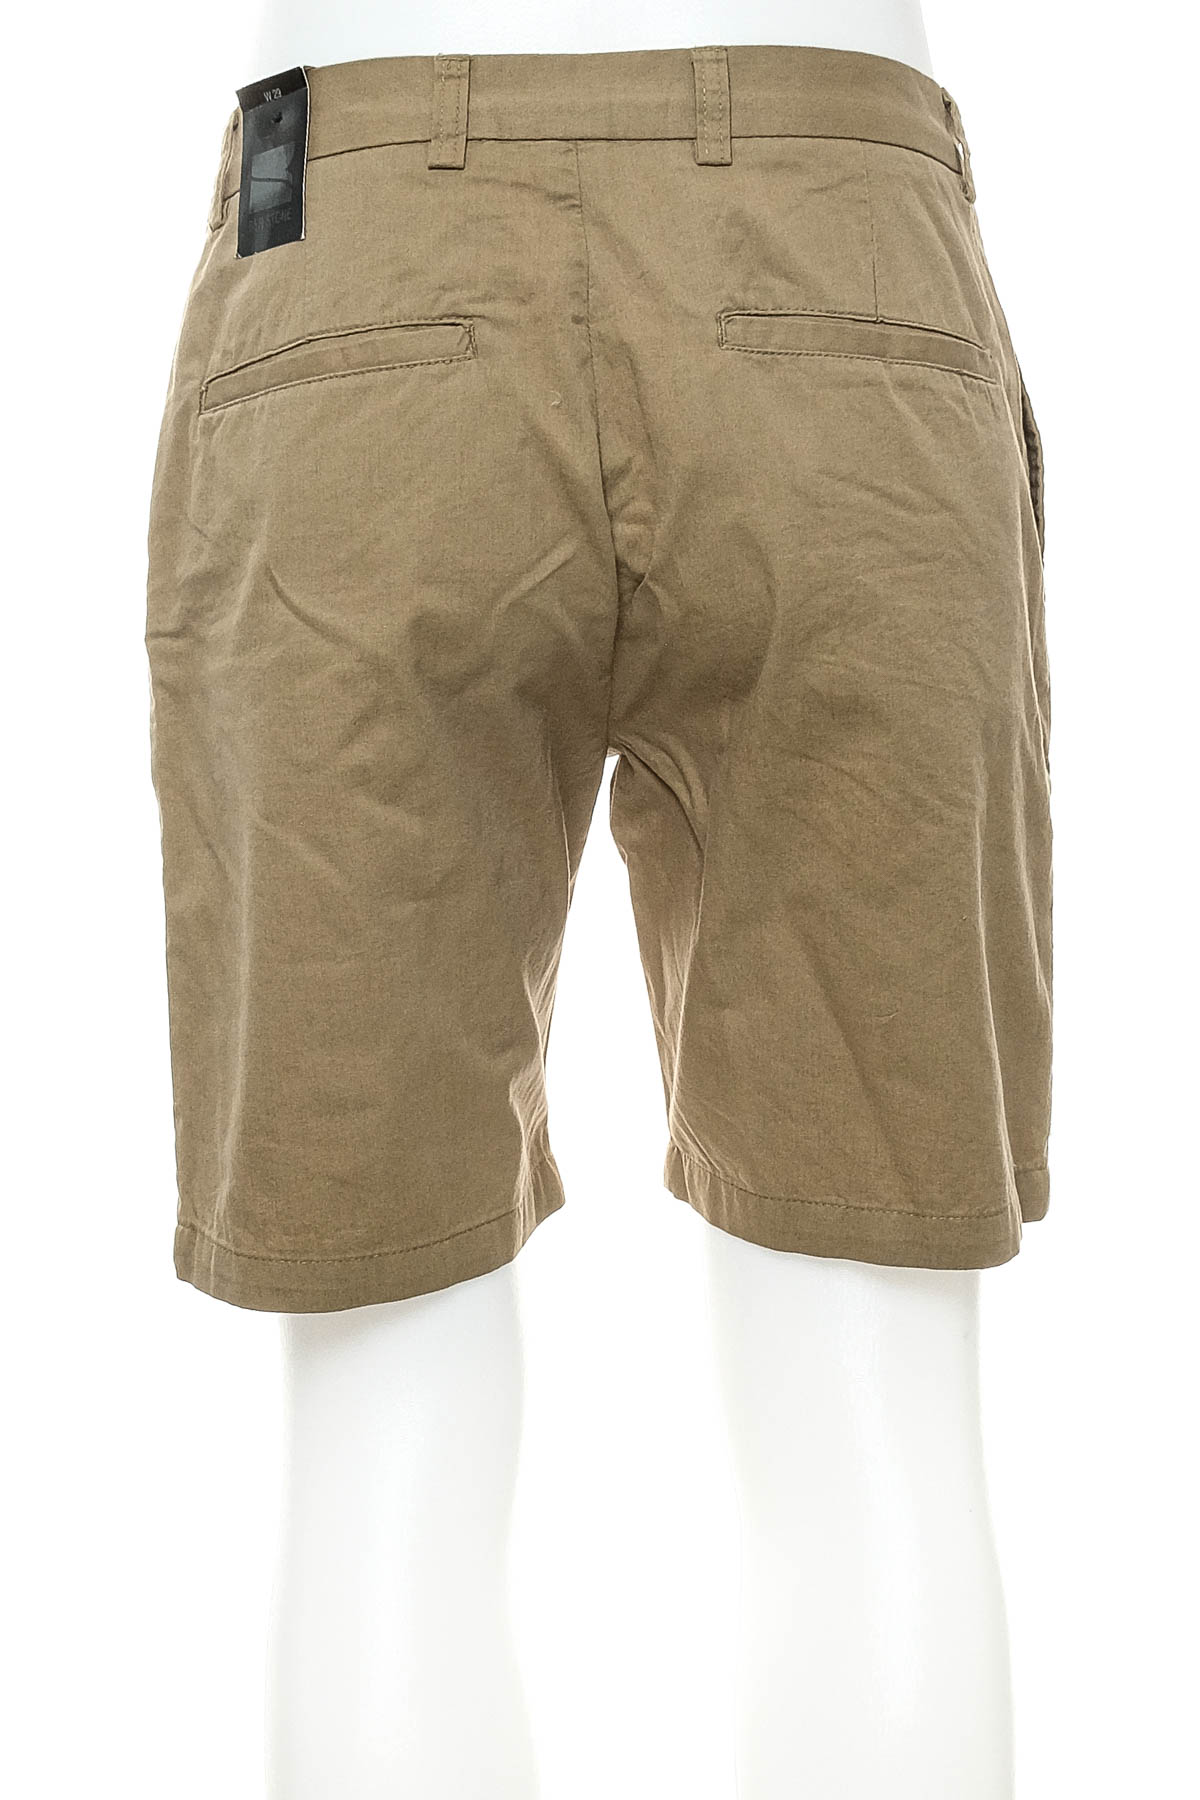 Men's shorts - BEN STONE - 1